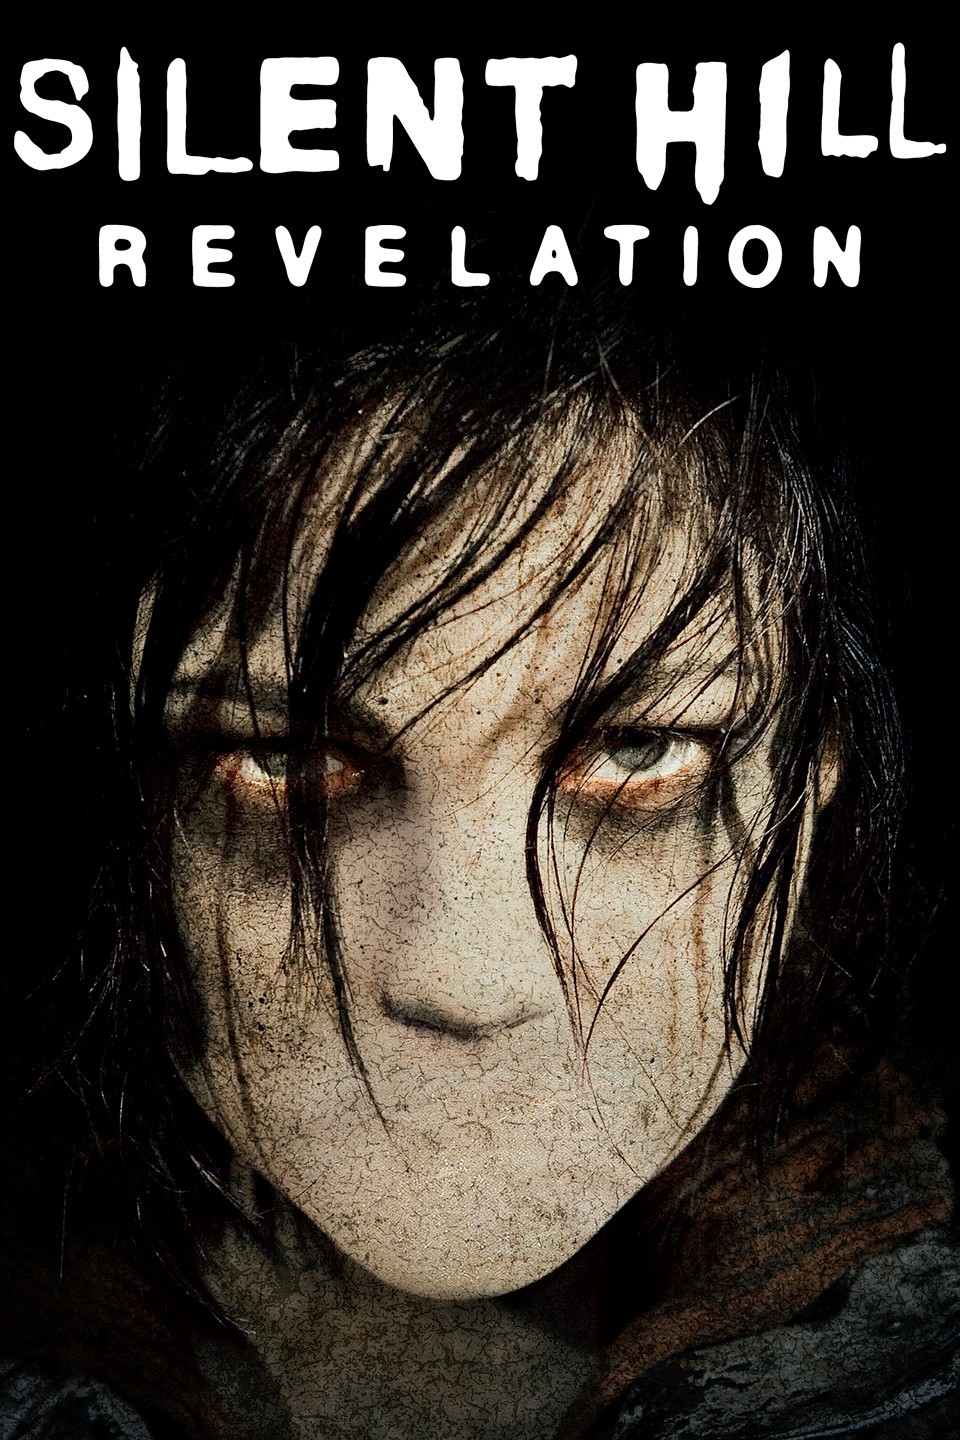 Silent Hill: Revelation (2012) [REVIEW]